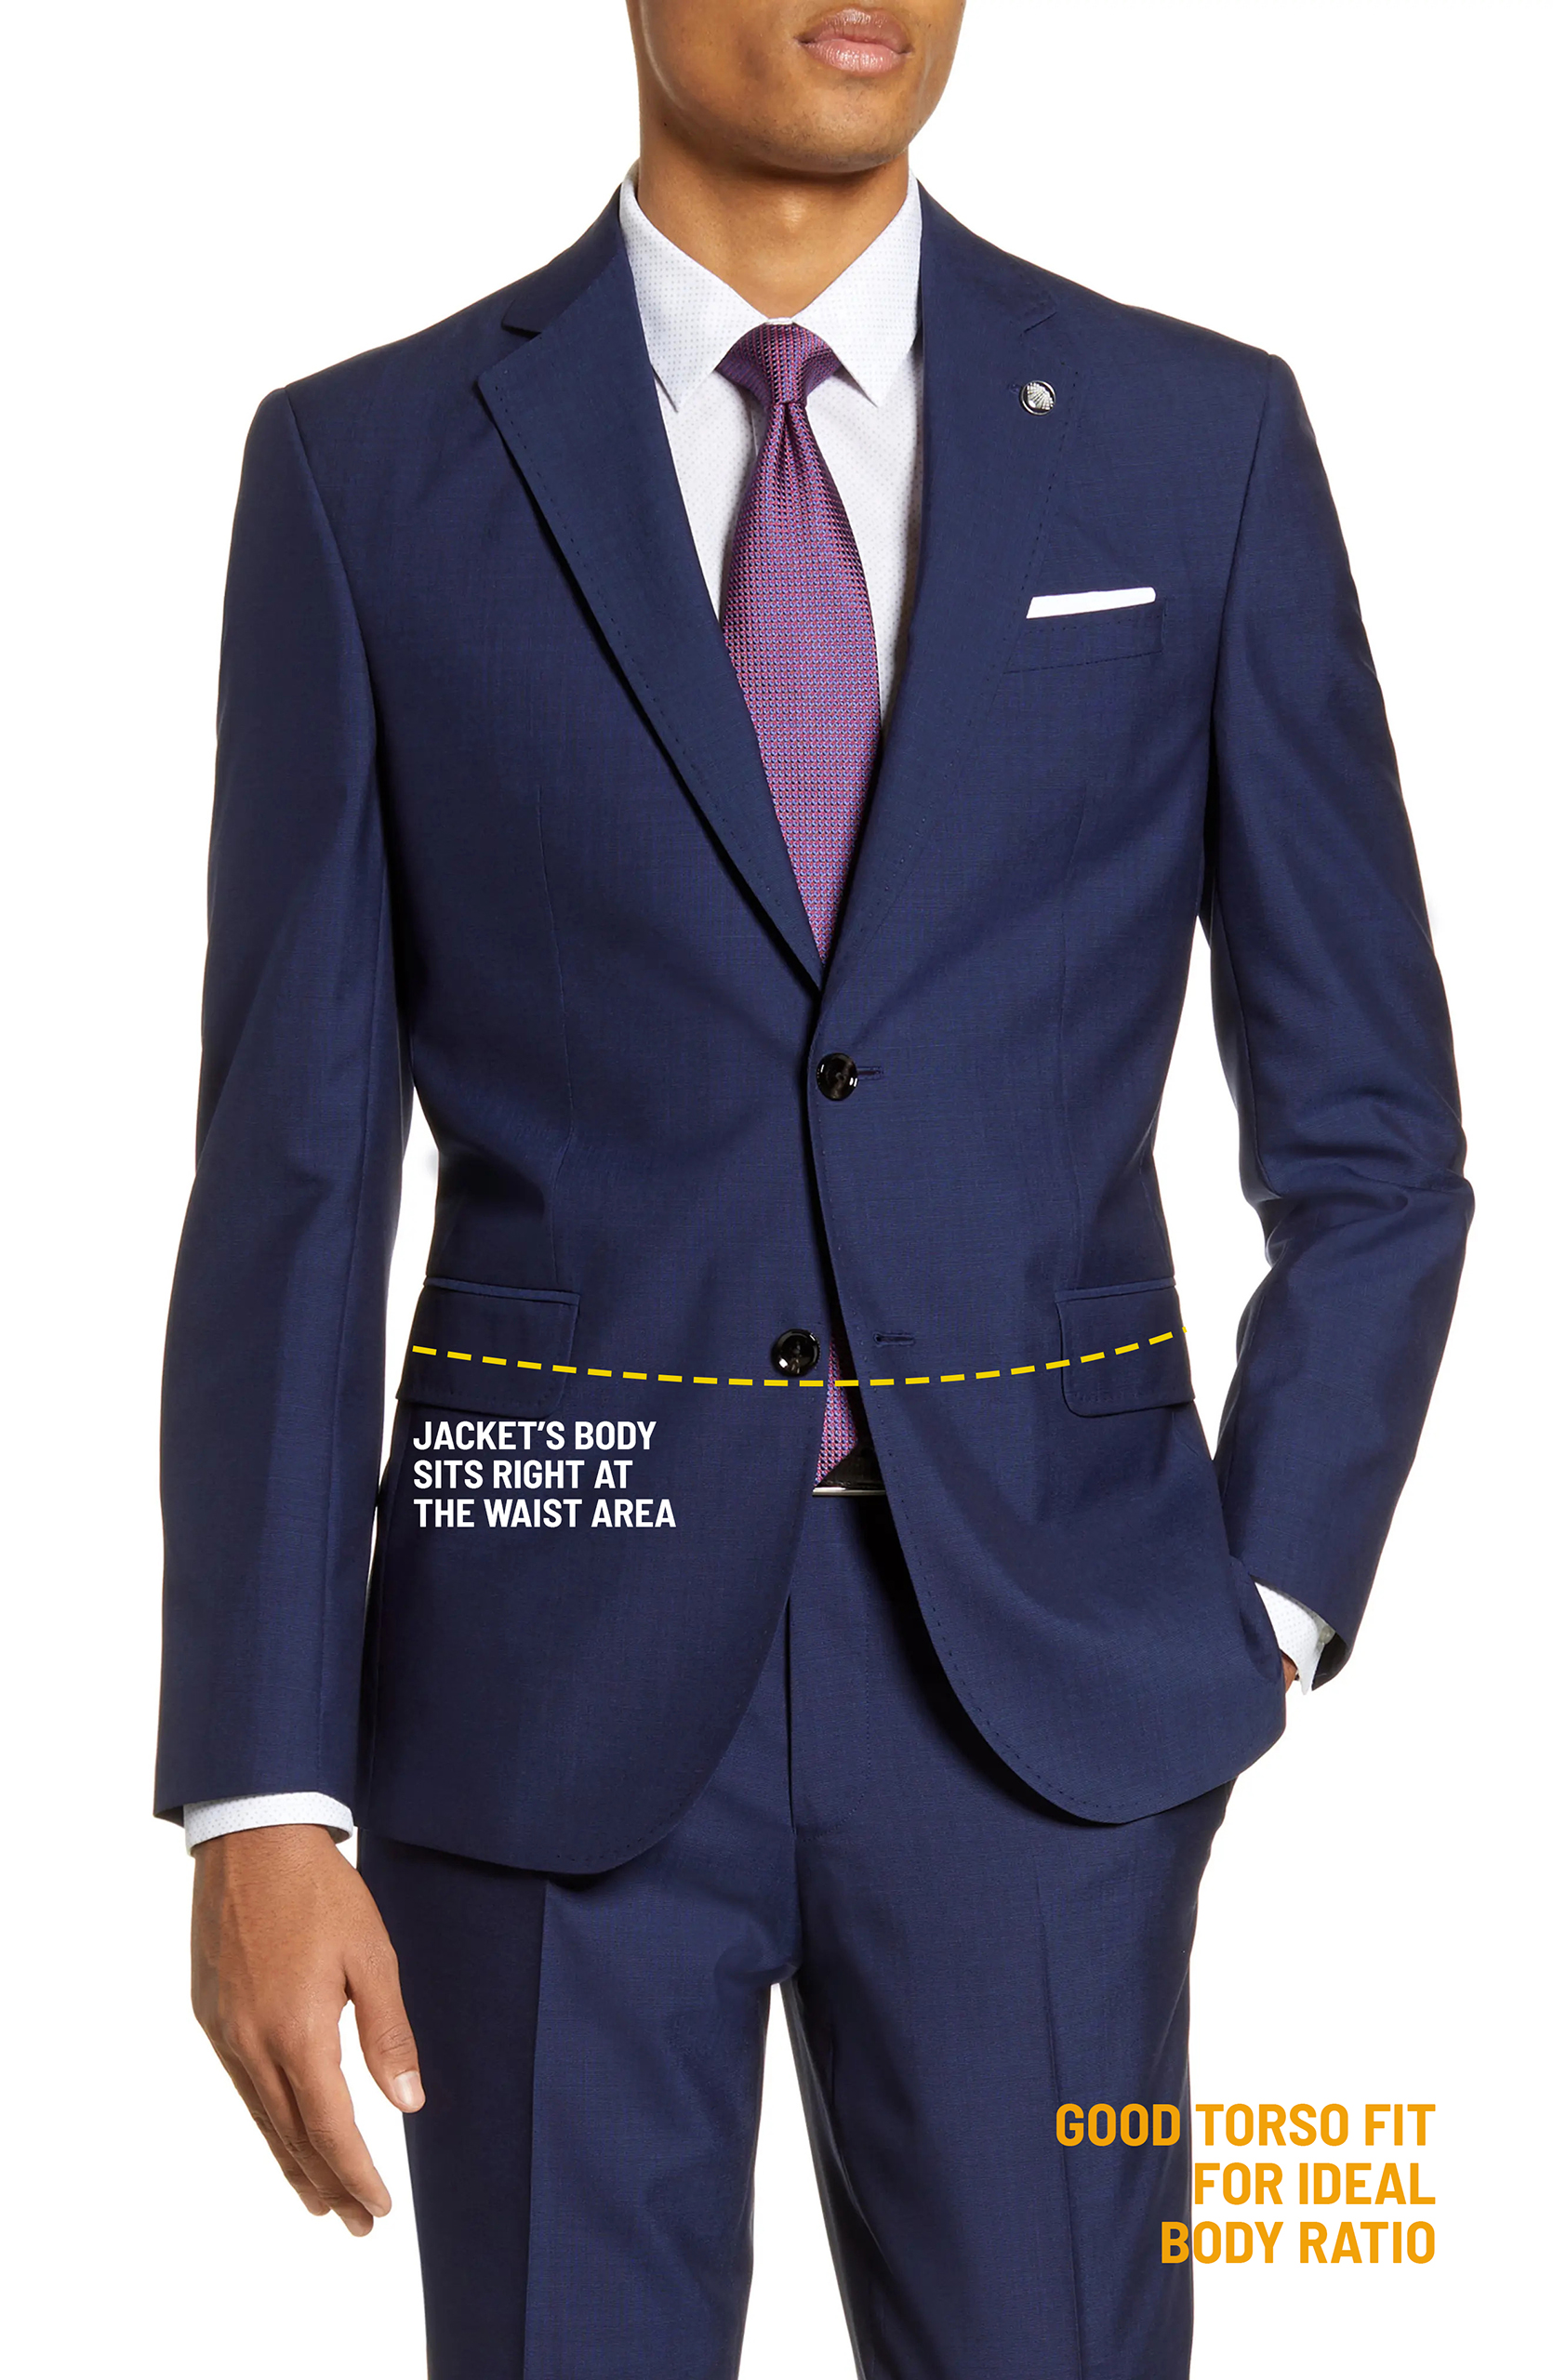 how should a suit fit: proper torso for ideal body ratio